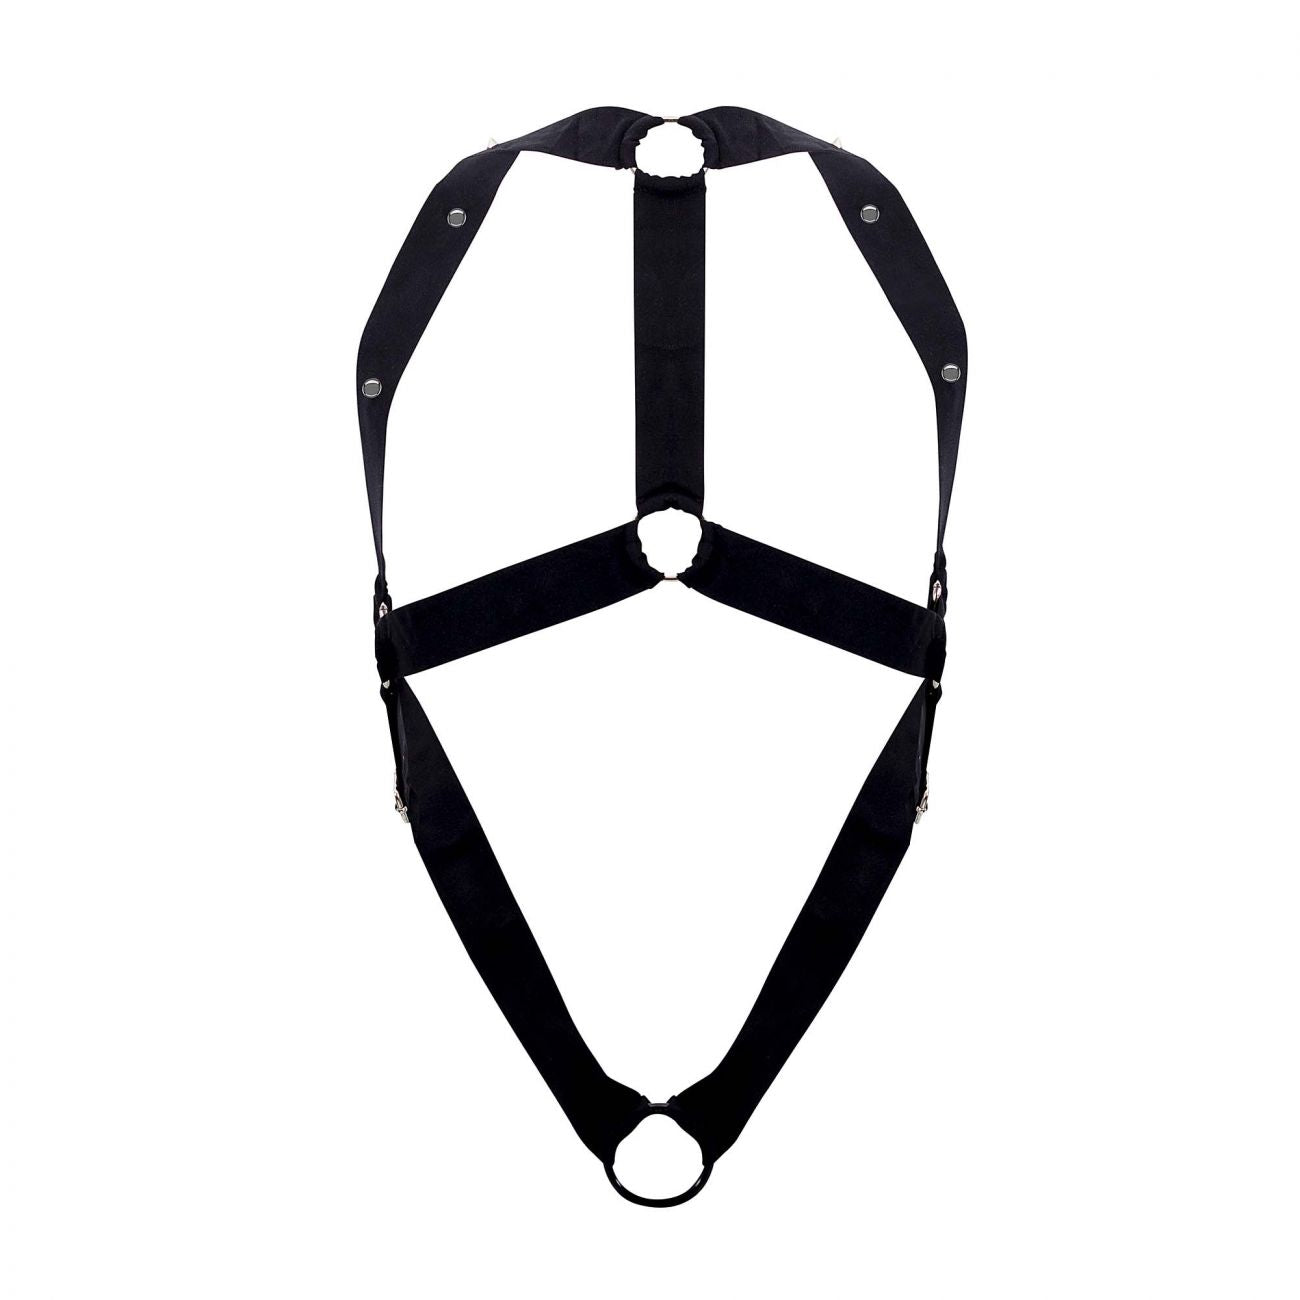 Xtremen 91108 C-Ring Harness